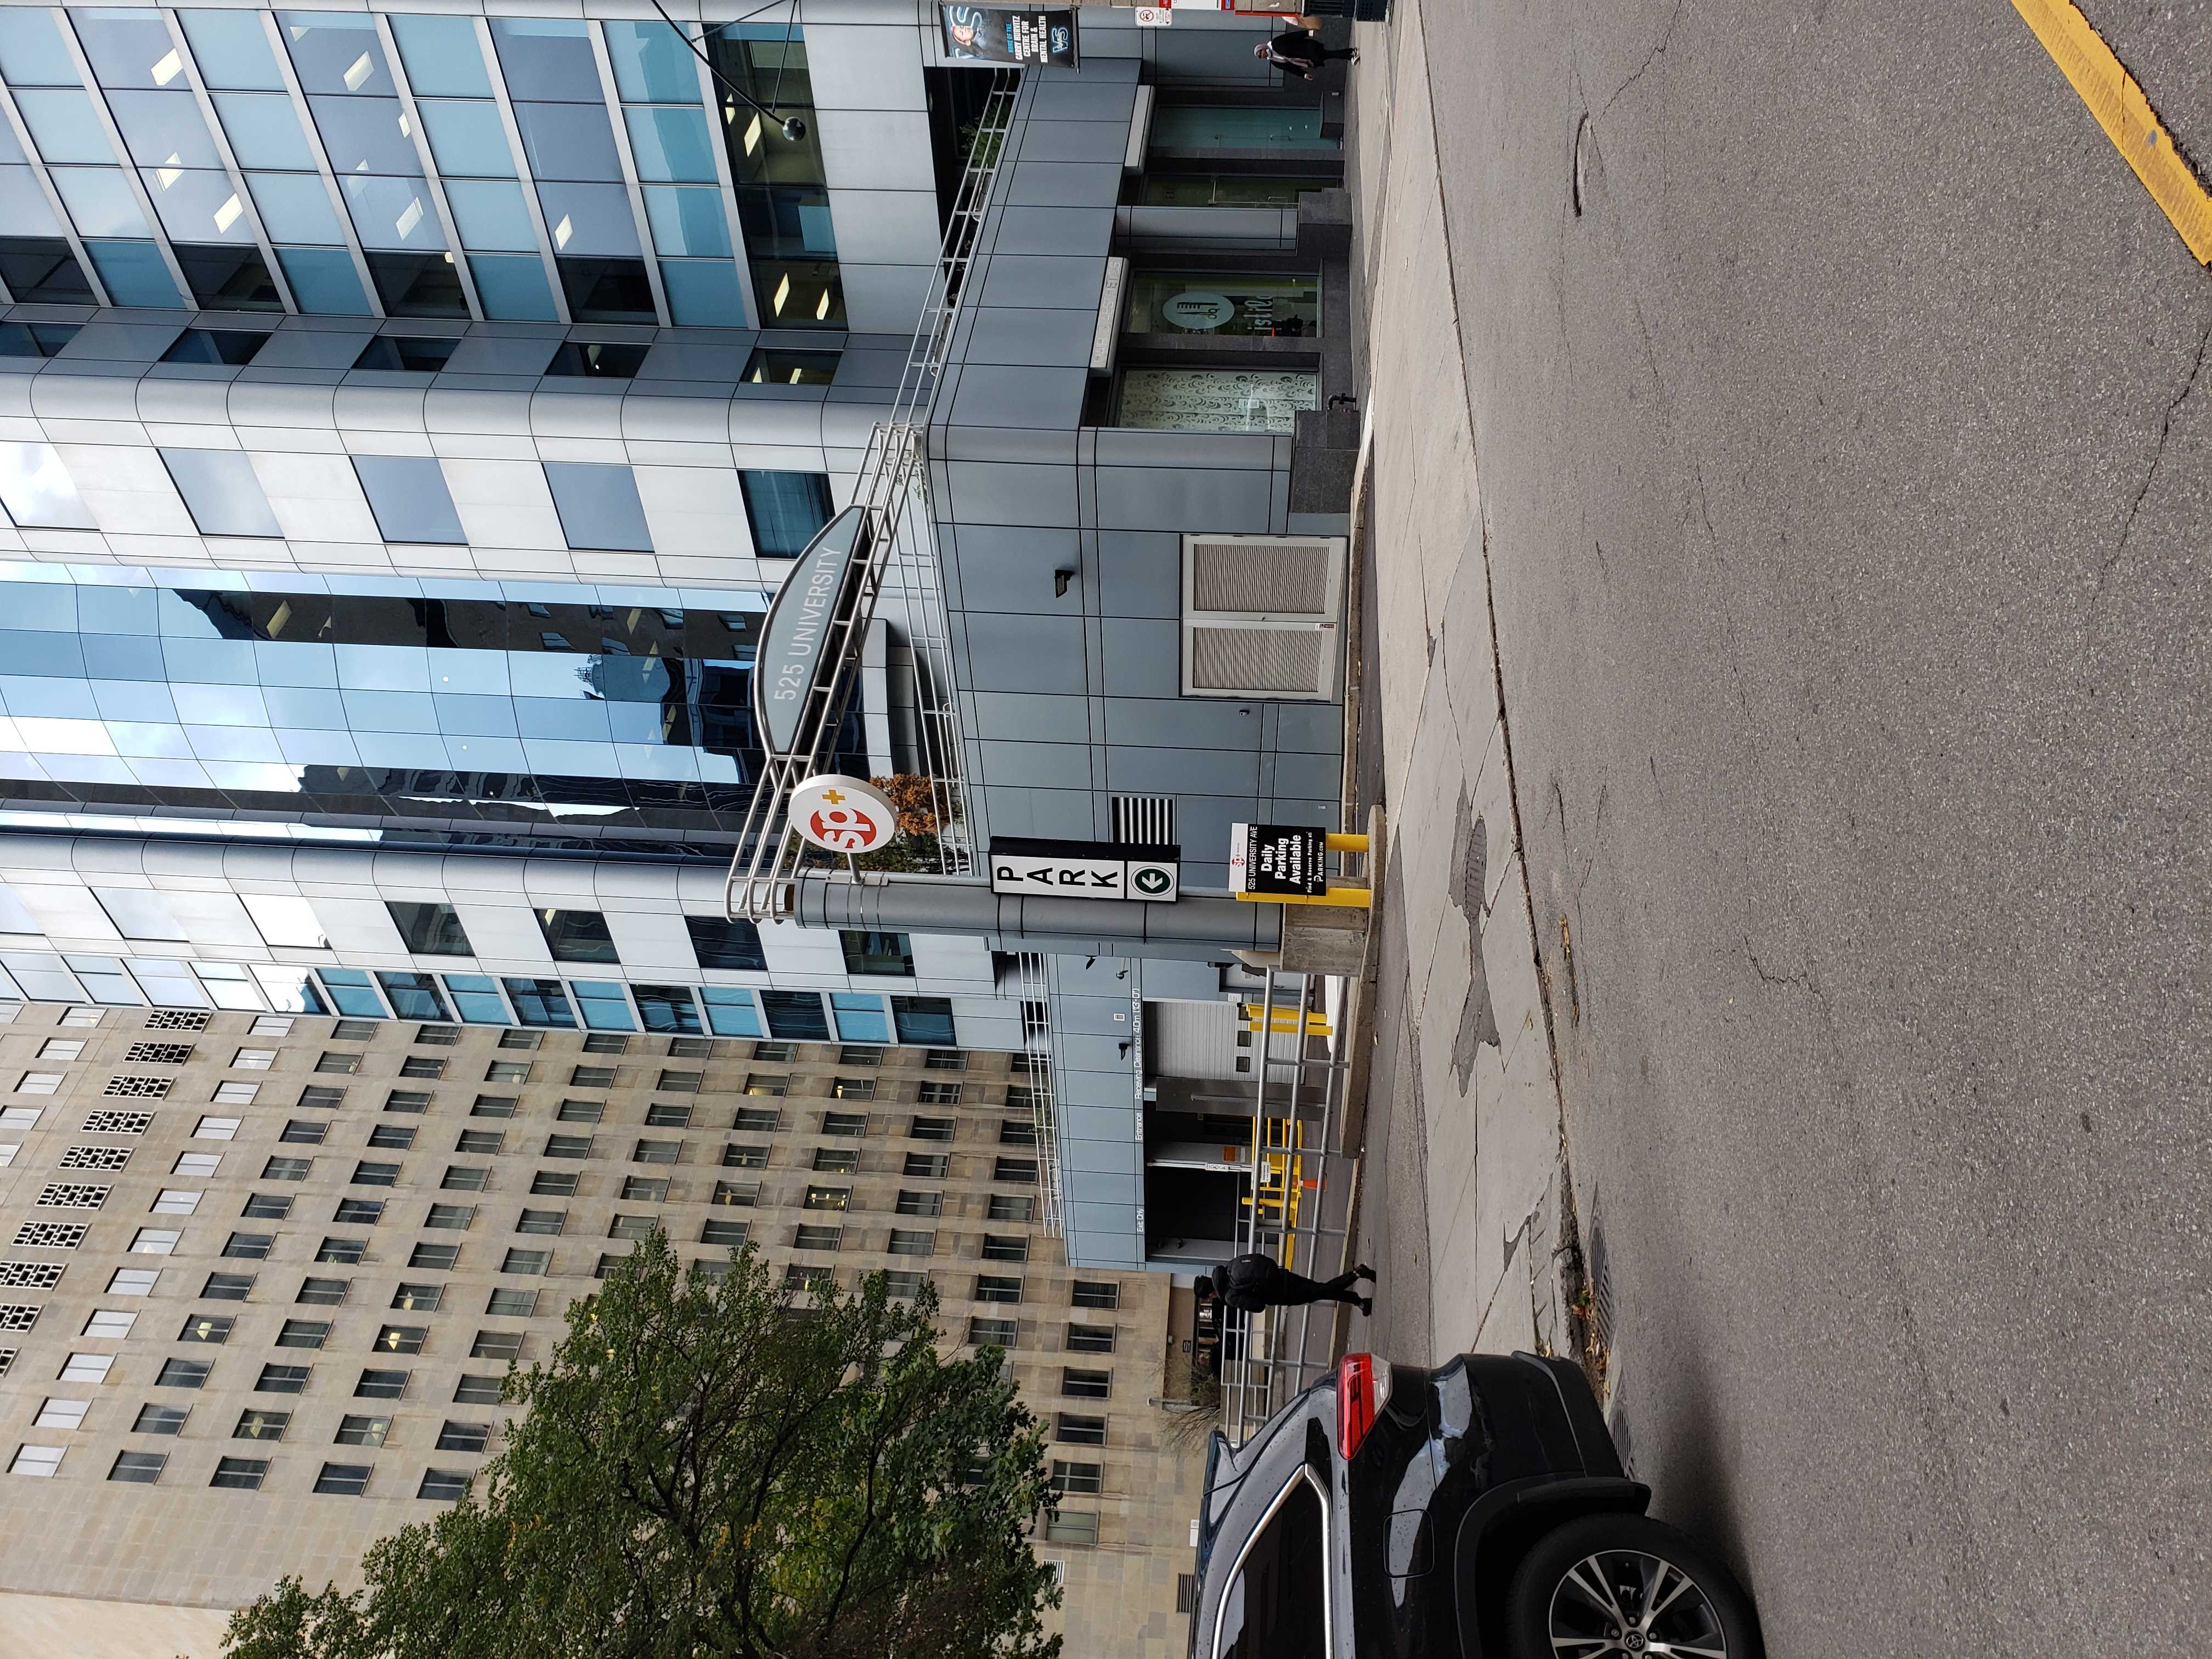 Find Toronto Parking Near Me